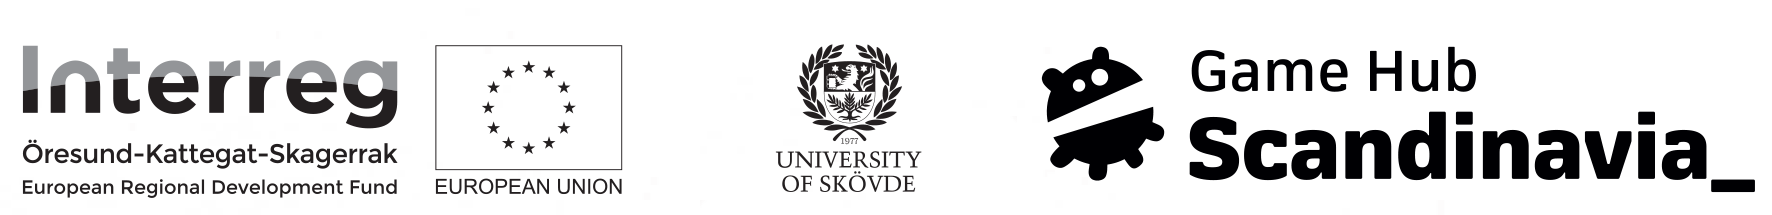 Interreg, University of Skövde, and Game Hub logos